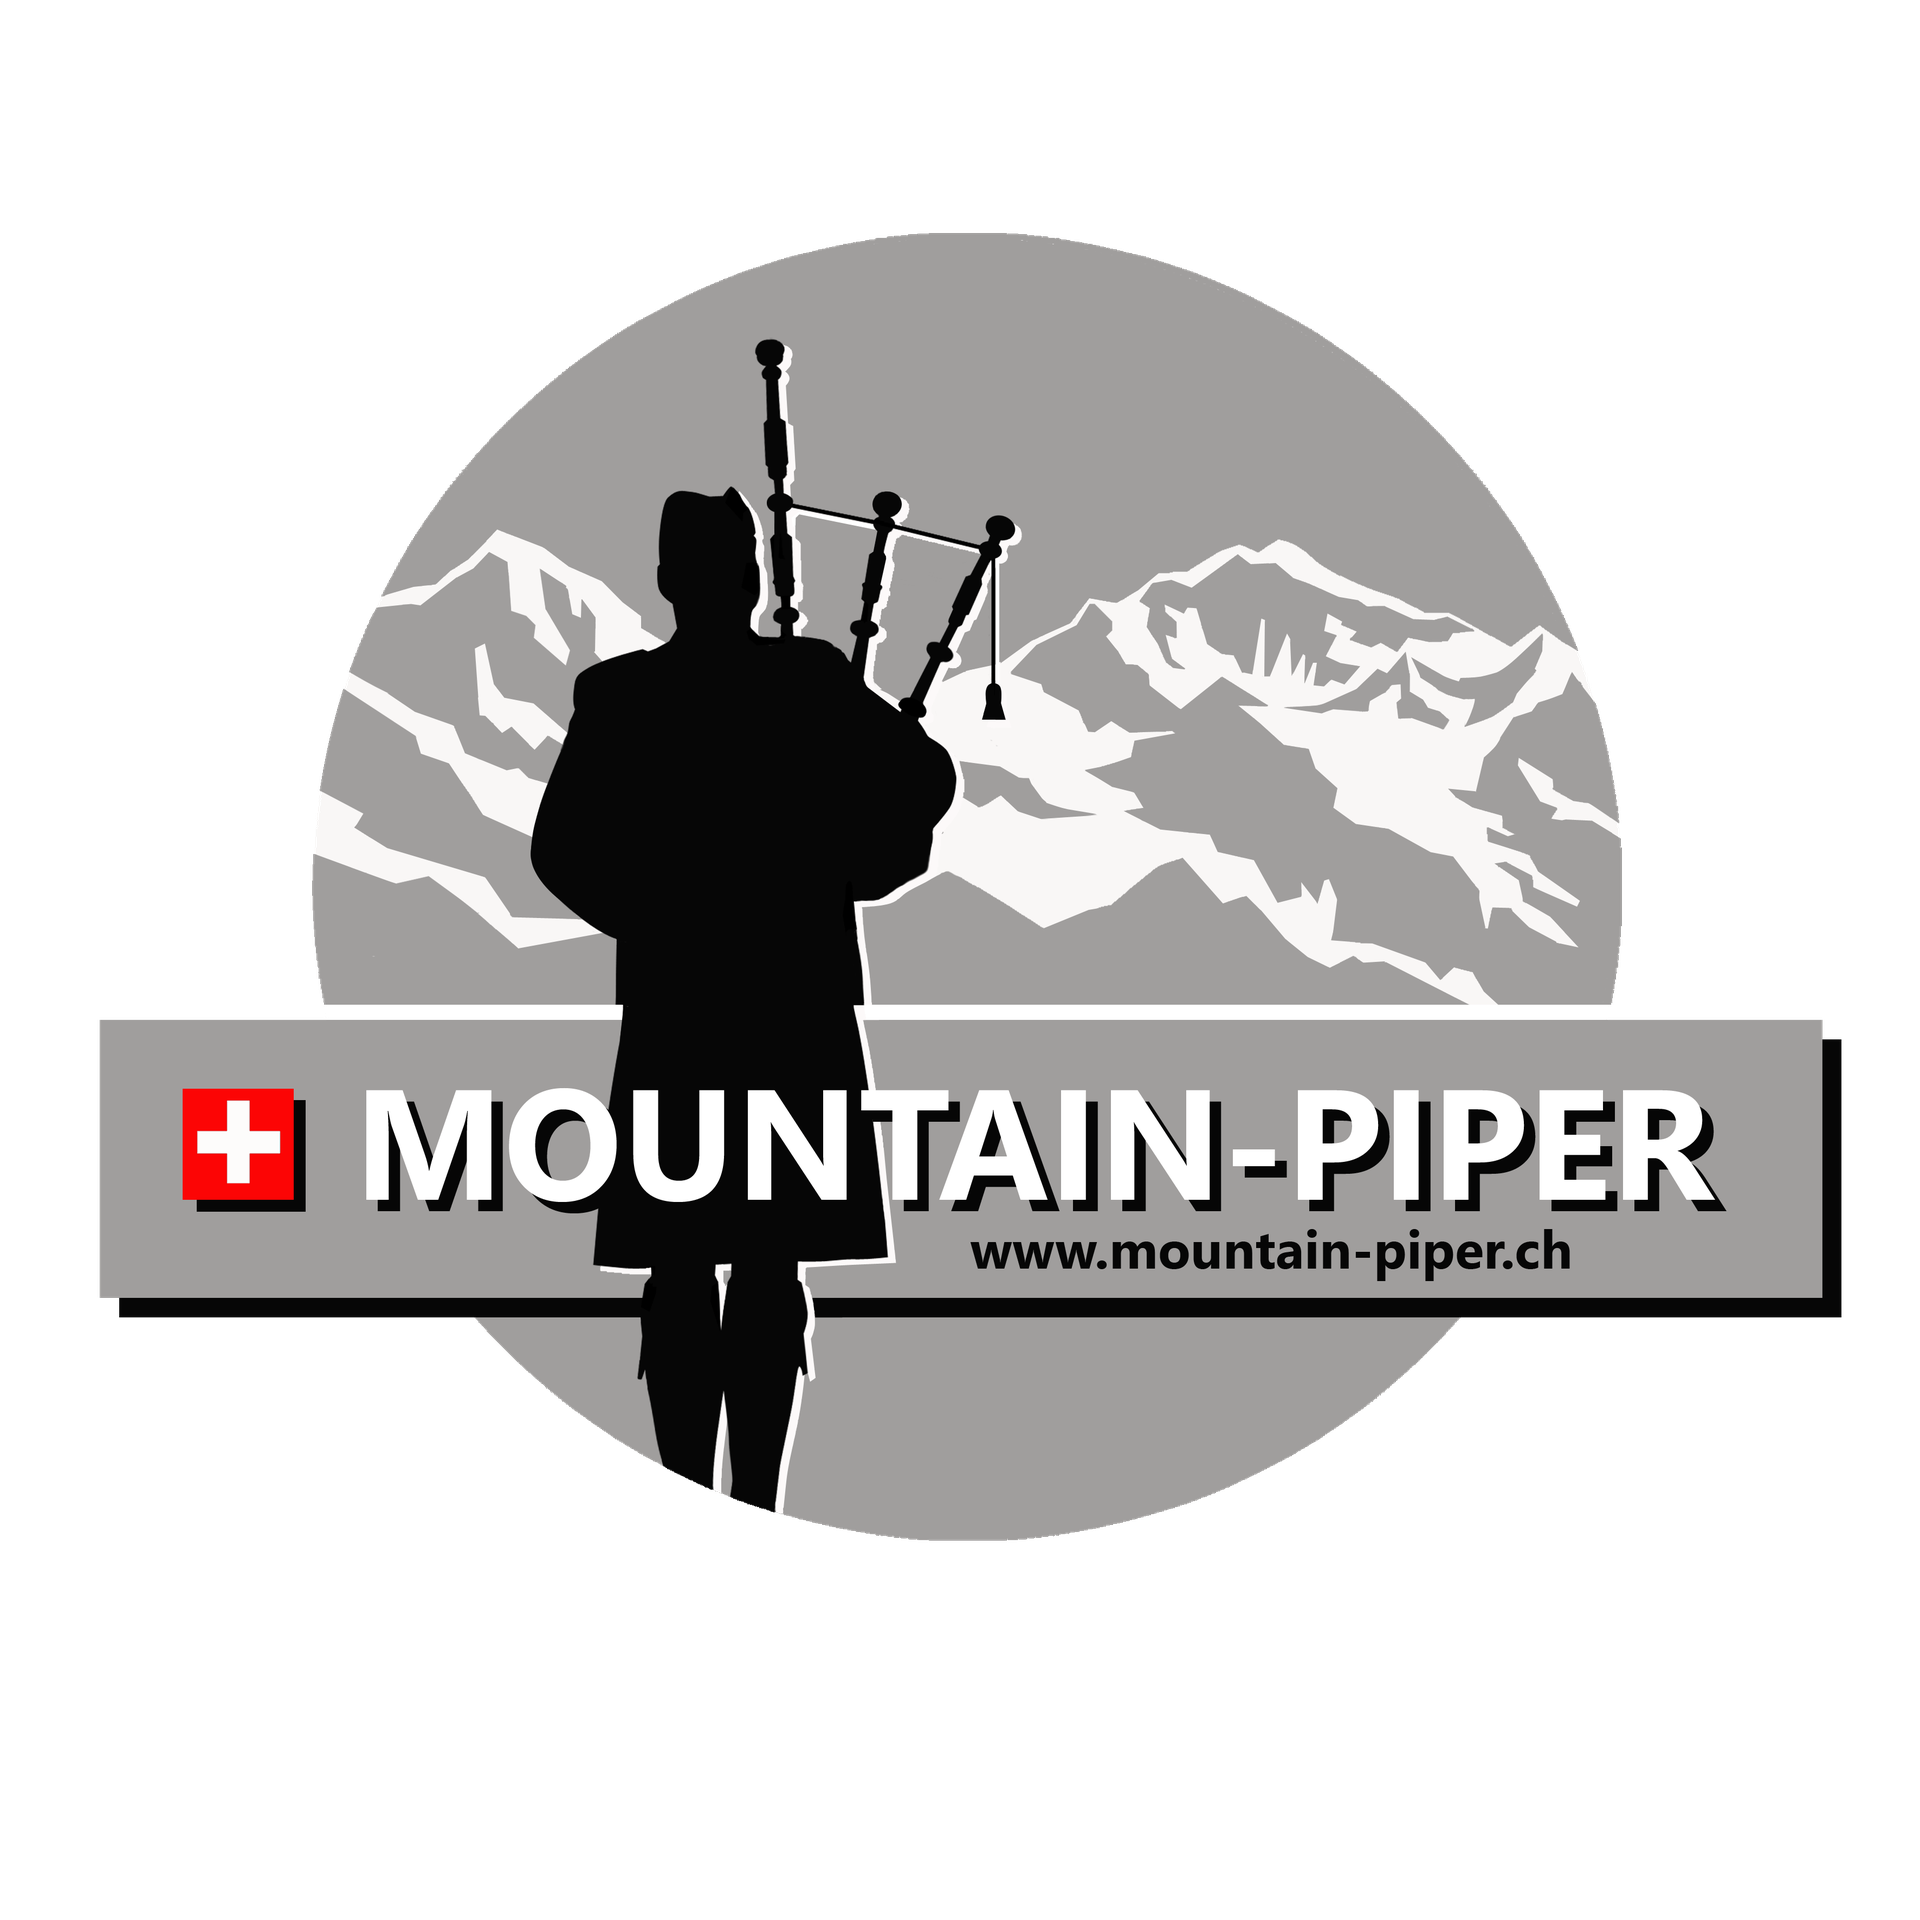 (c) Mountain-piper.ch